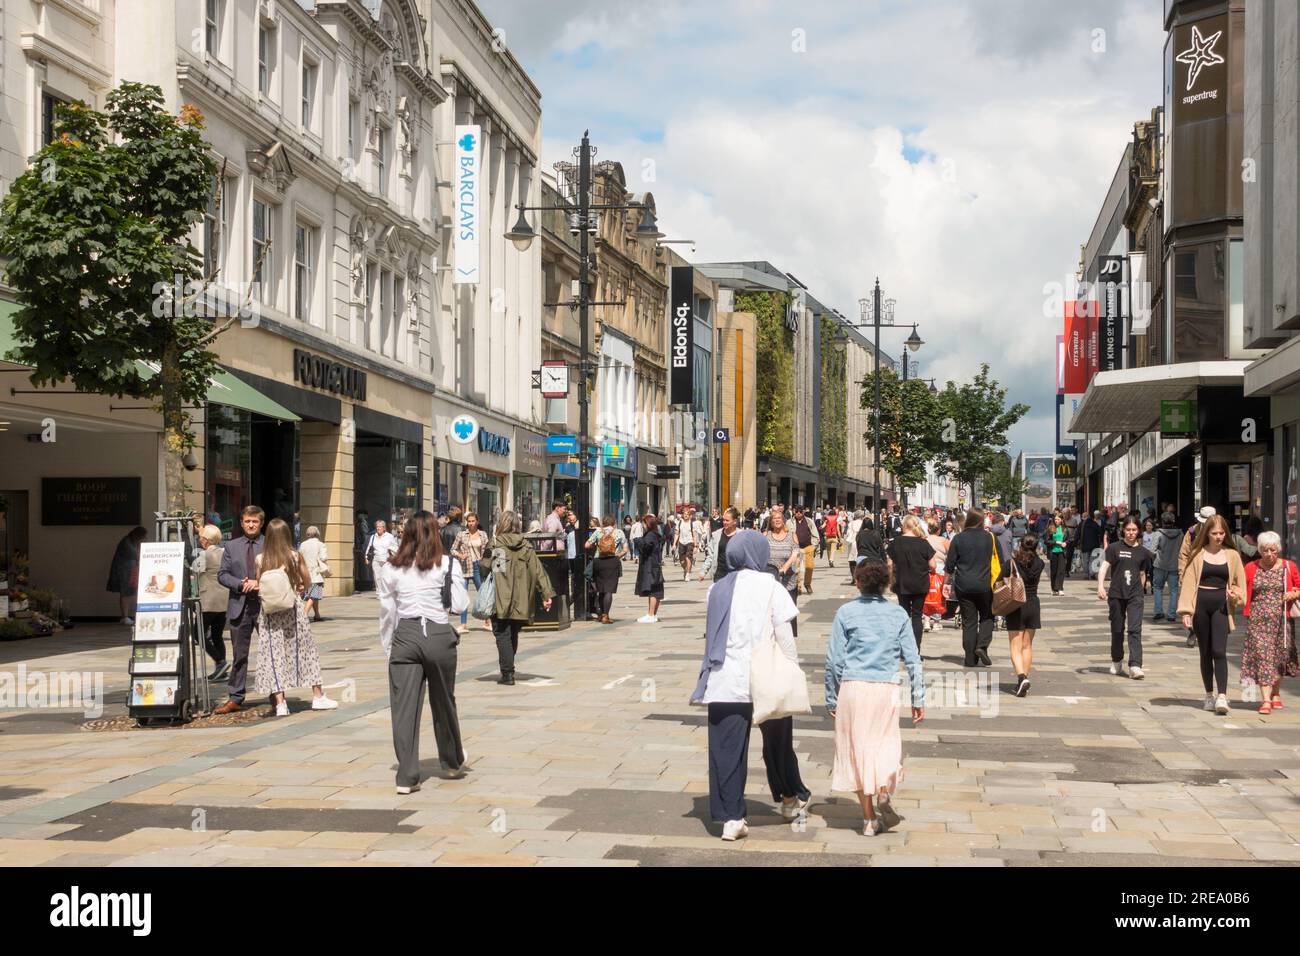 People walking along Northumberland Street in Newcastle city centre, England, UK Stock Photo